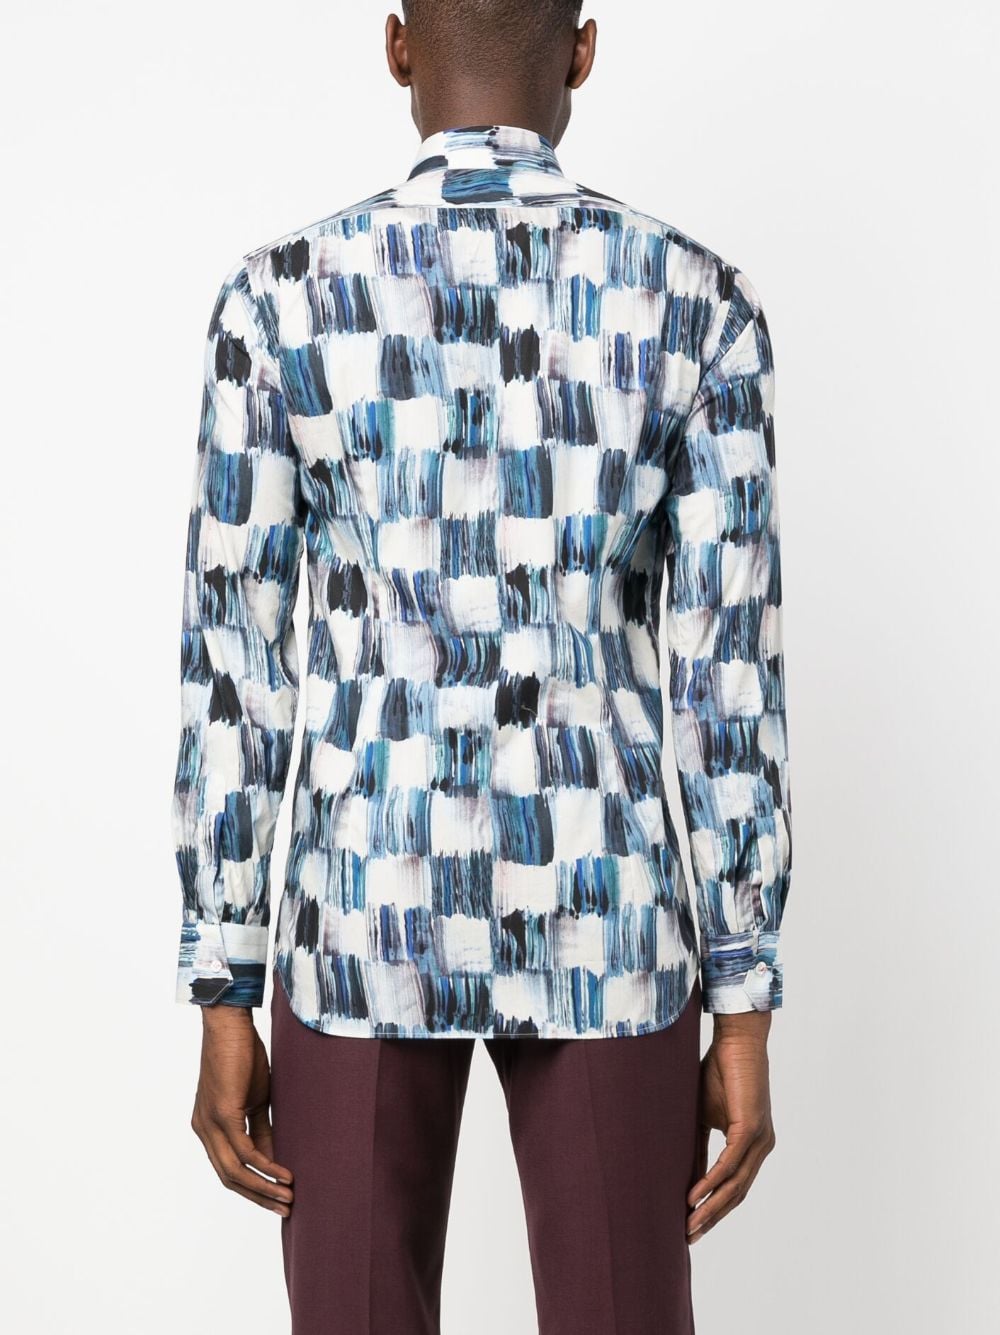 GABRIELE PASINI Italian Cotton Shirt in Checkerboard Print